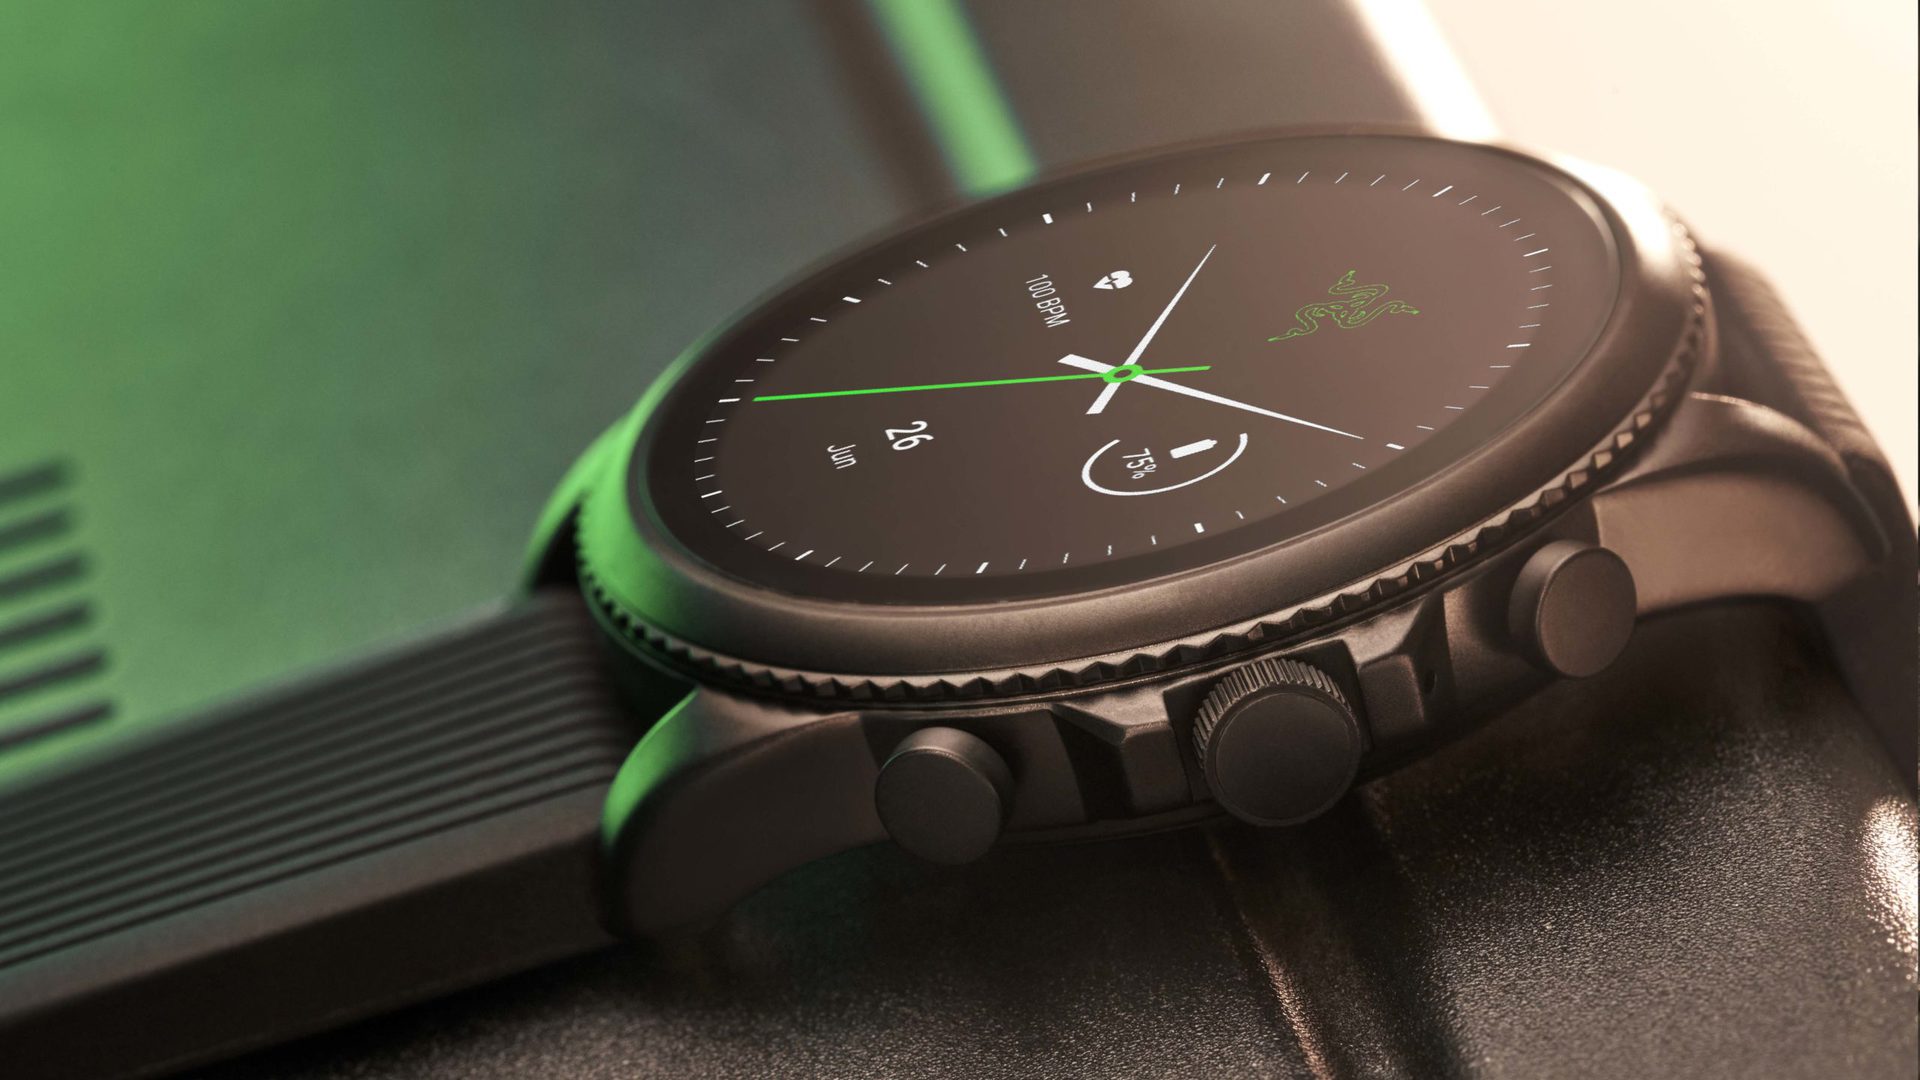 Razer X Fossil Gen 6智能手表的美容镜头显示了Razer的黑色和绿色美学以及其表面上的Razer徽标。